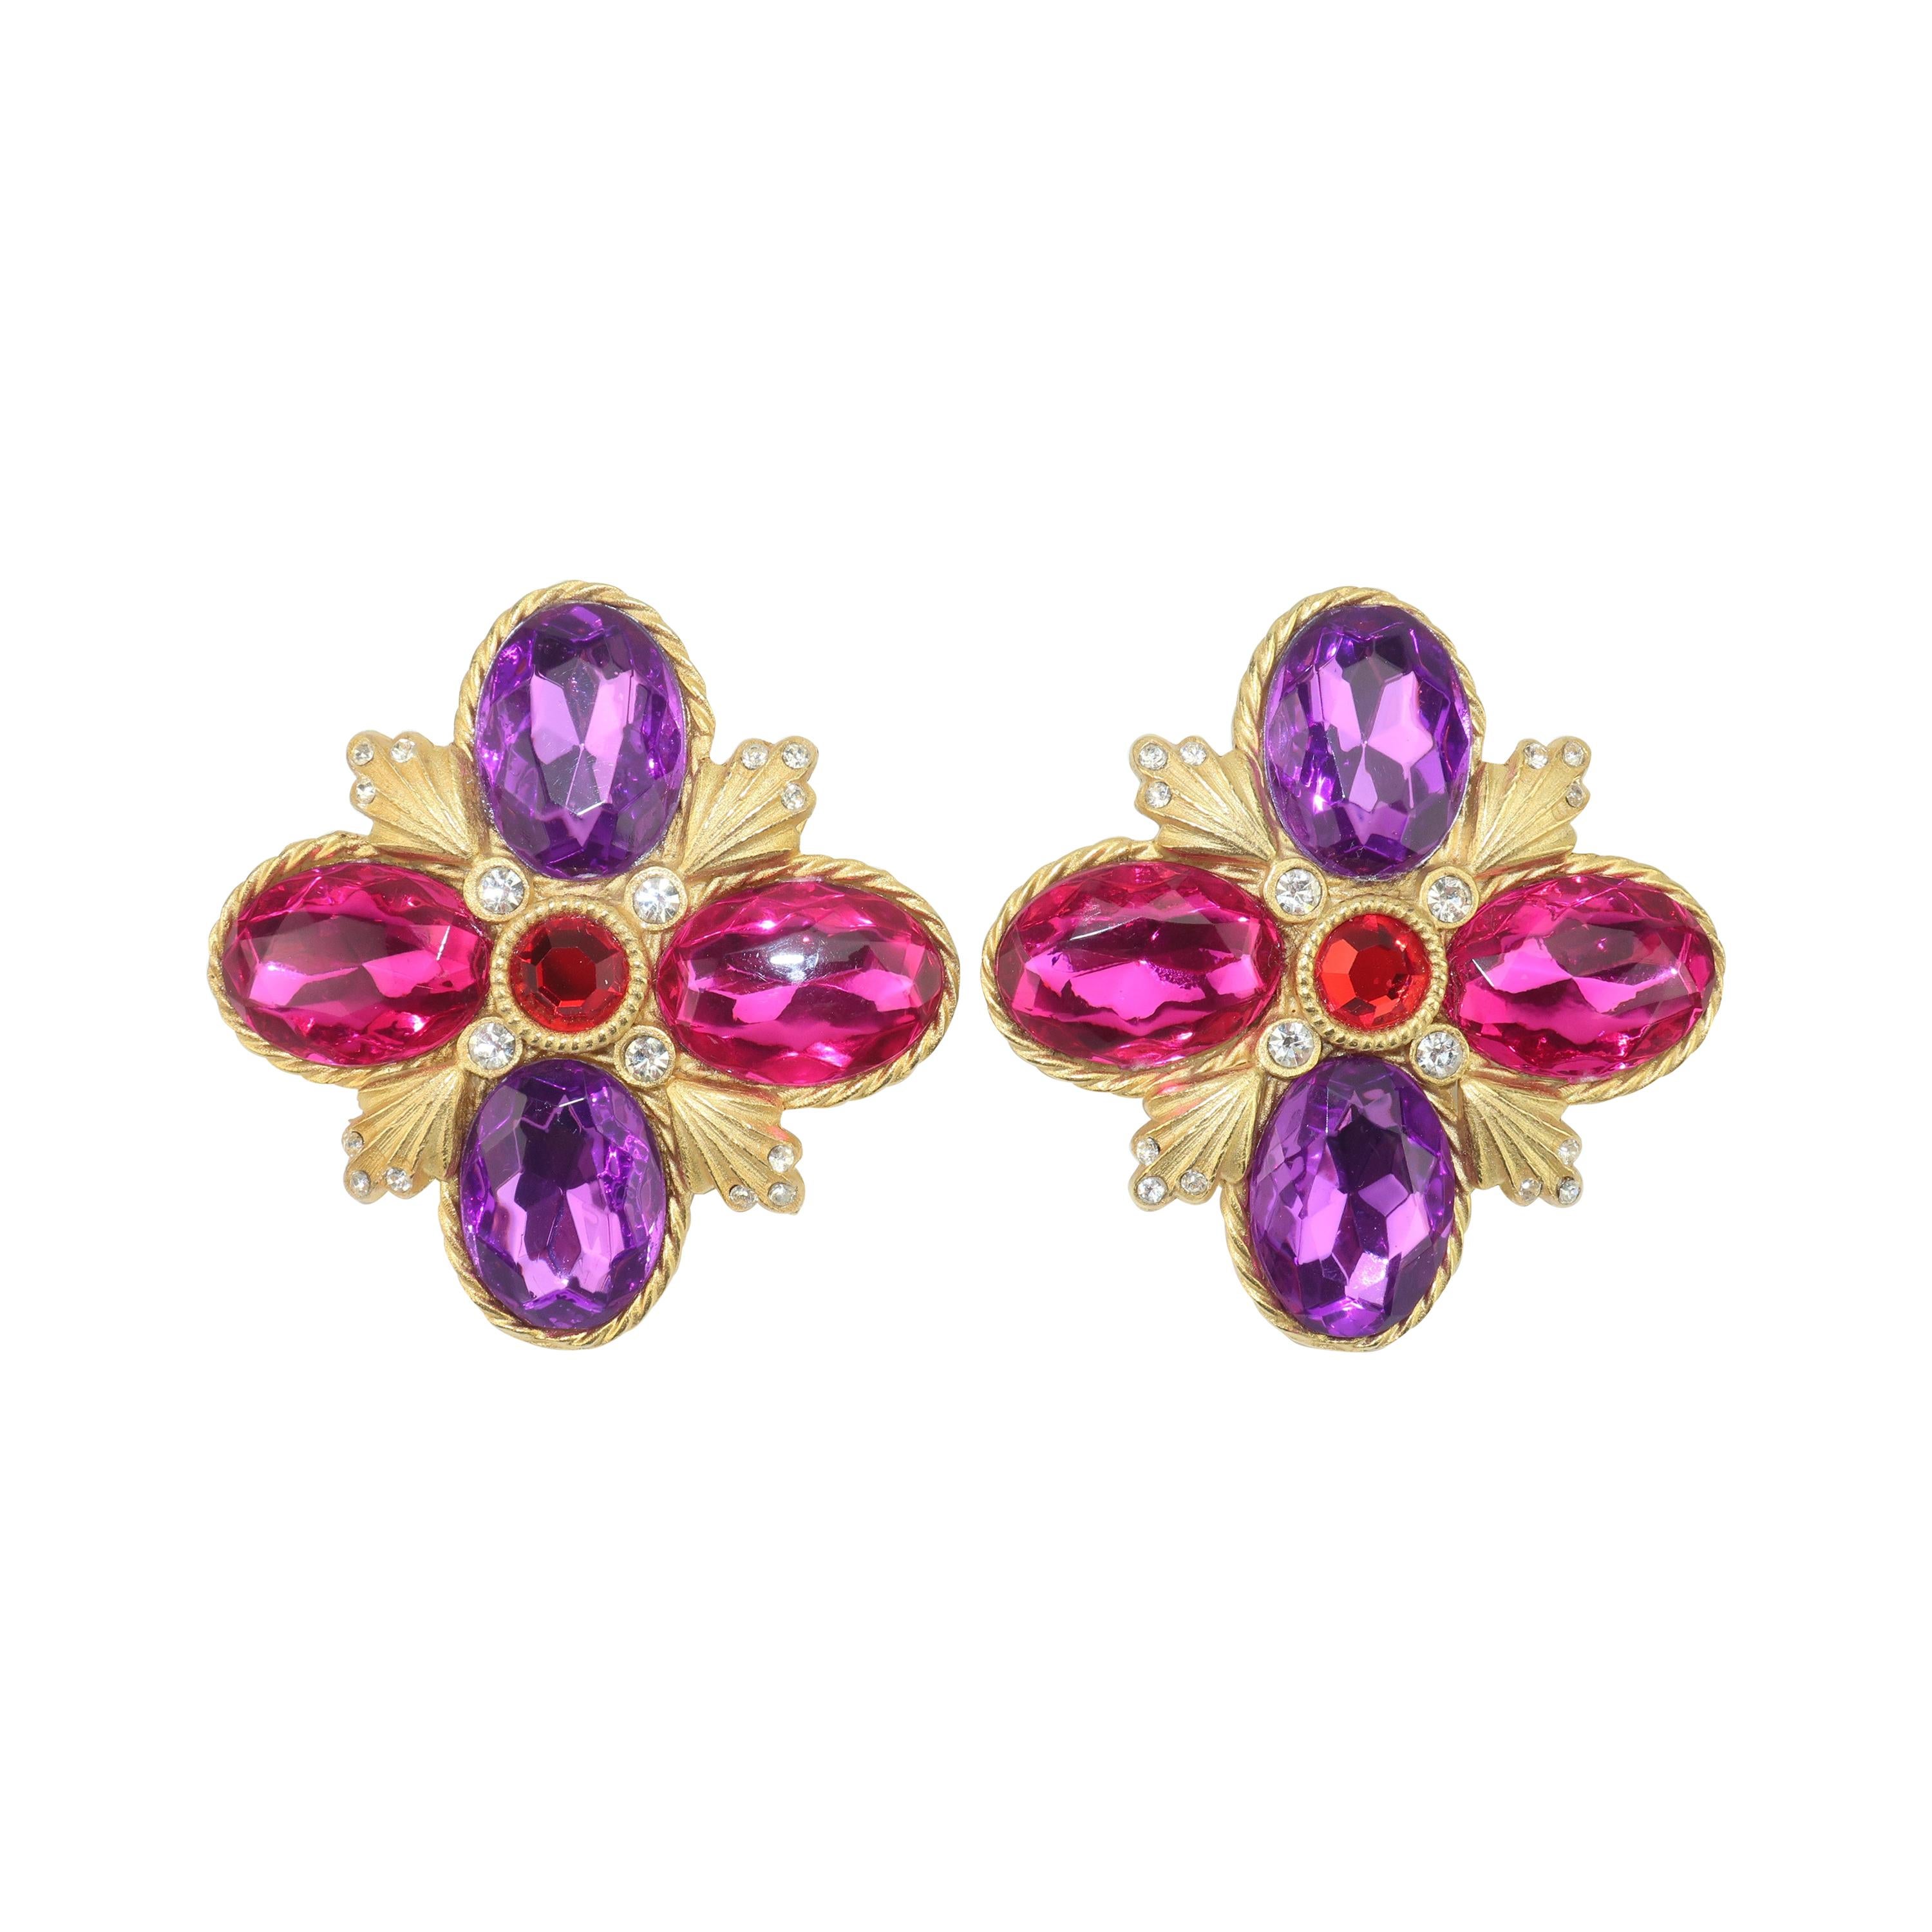 Gerard Yosca Gold Tone Pink, Red & Purple Earrings, 1980's